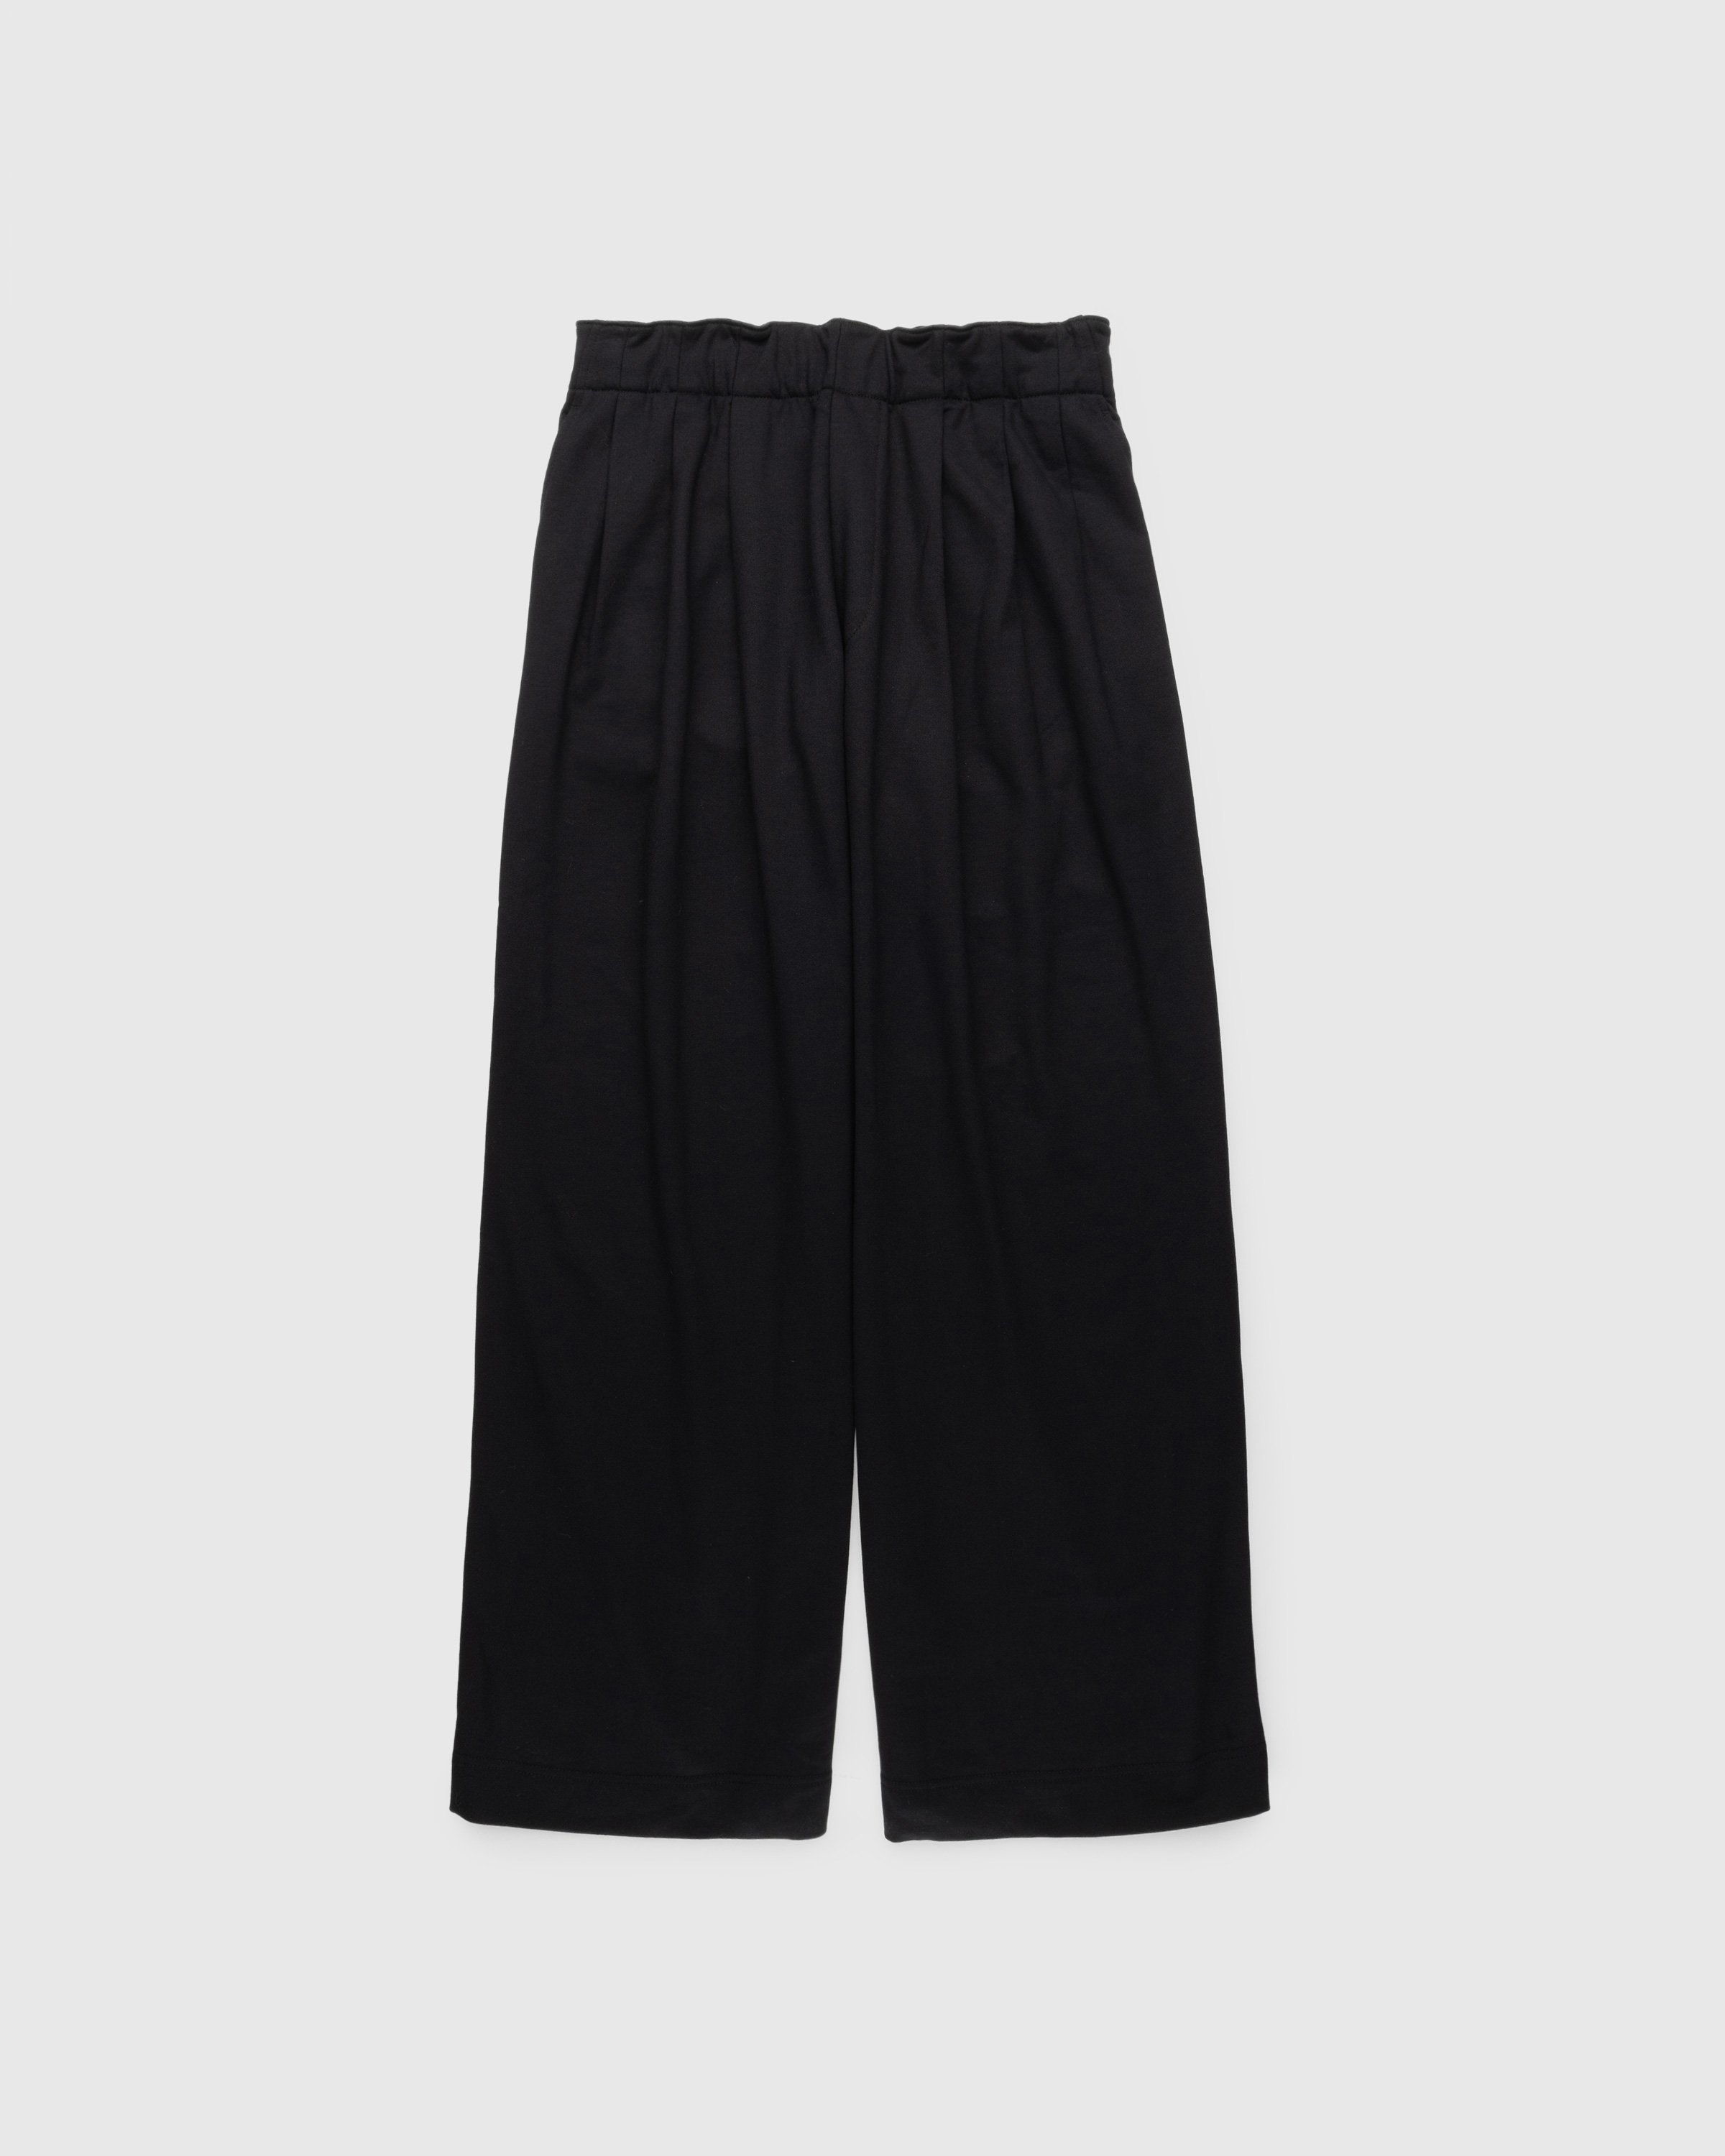 Dries van Noten – Hama Cotton Jersey Pants Black | Highsnobiety Shop